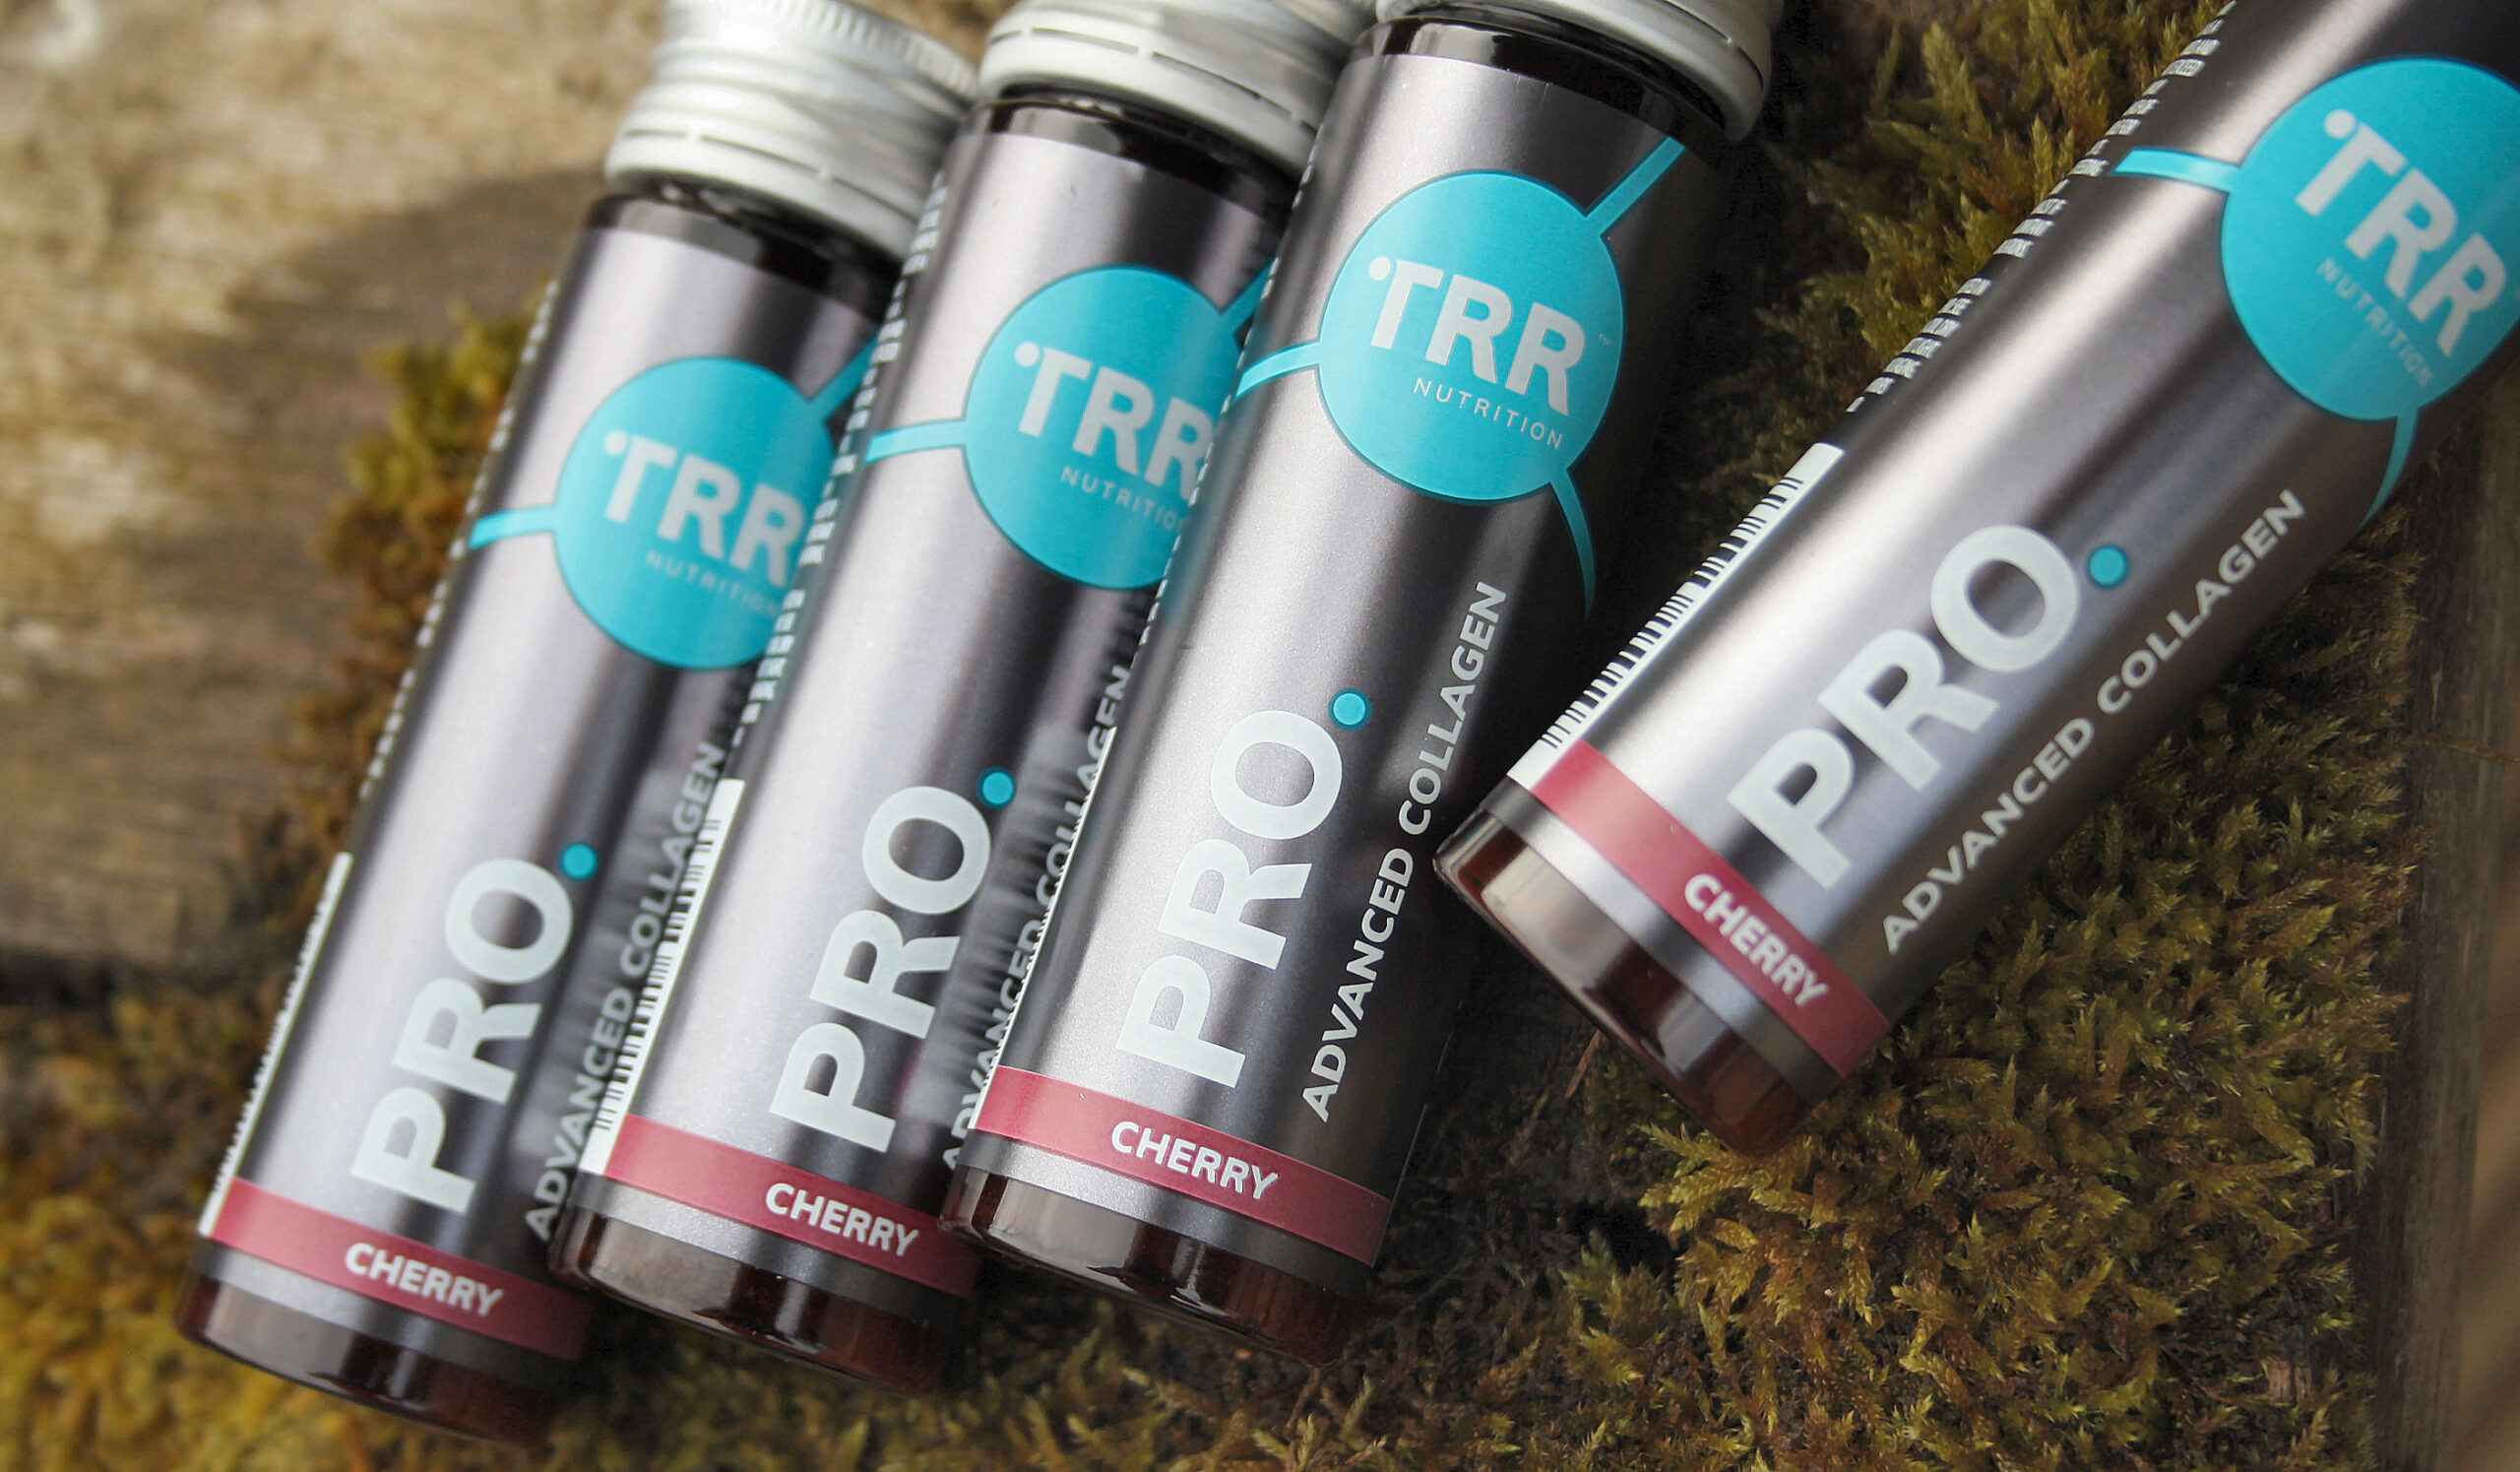 TRR Collagen Review supplements